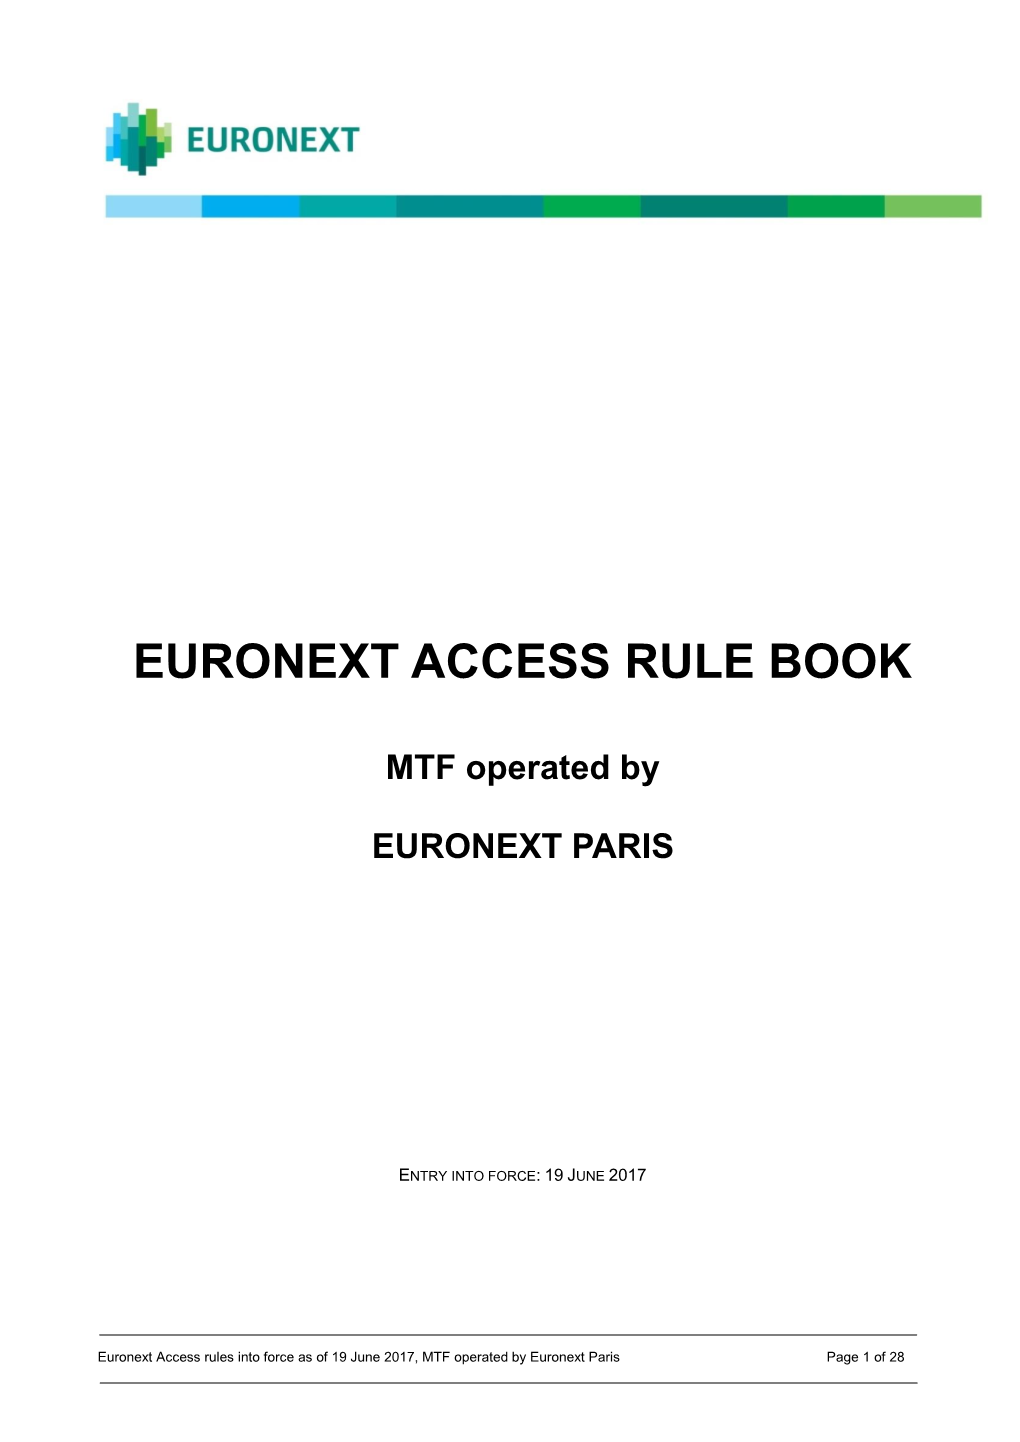 Euronext Access Rule Book